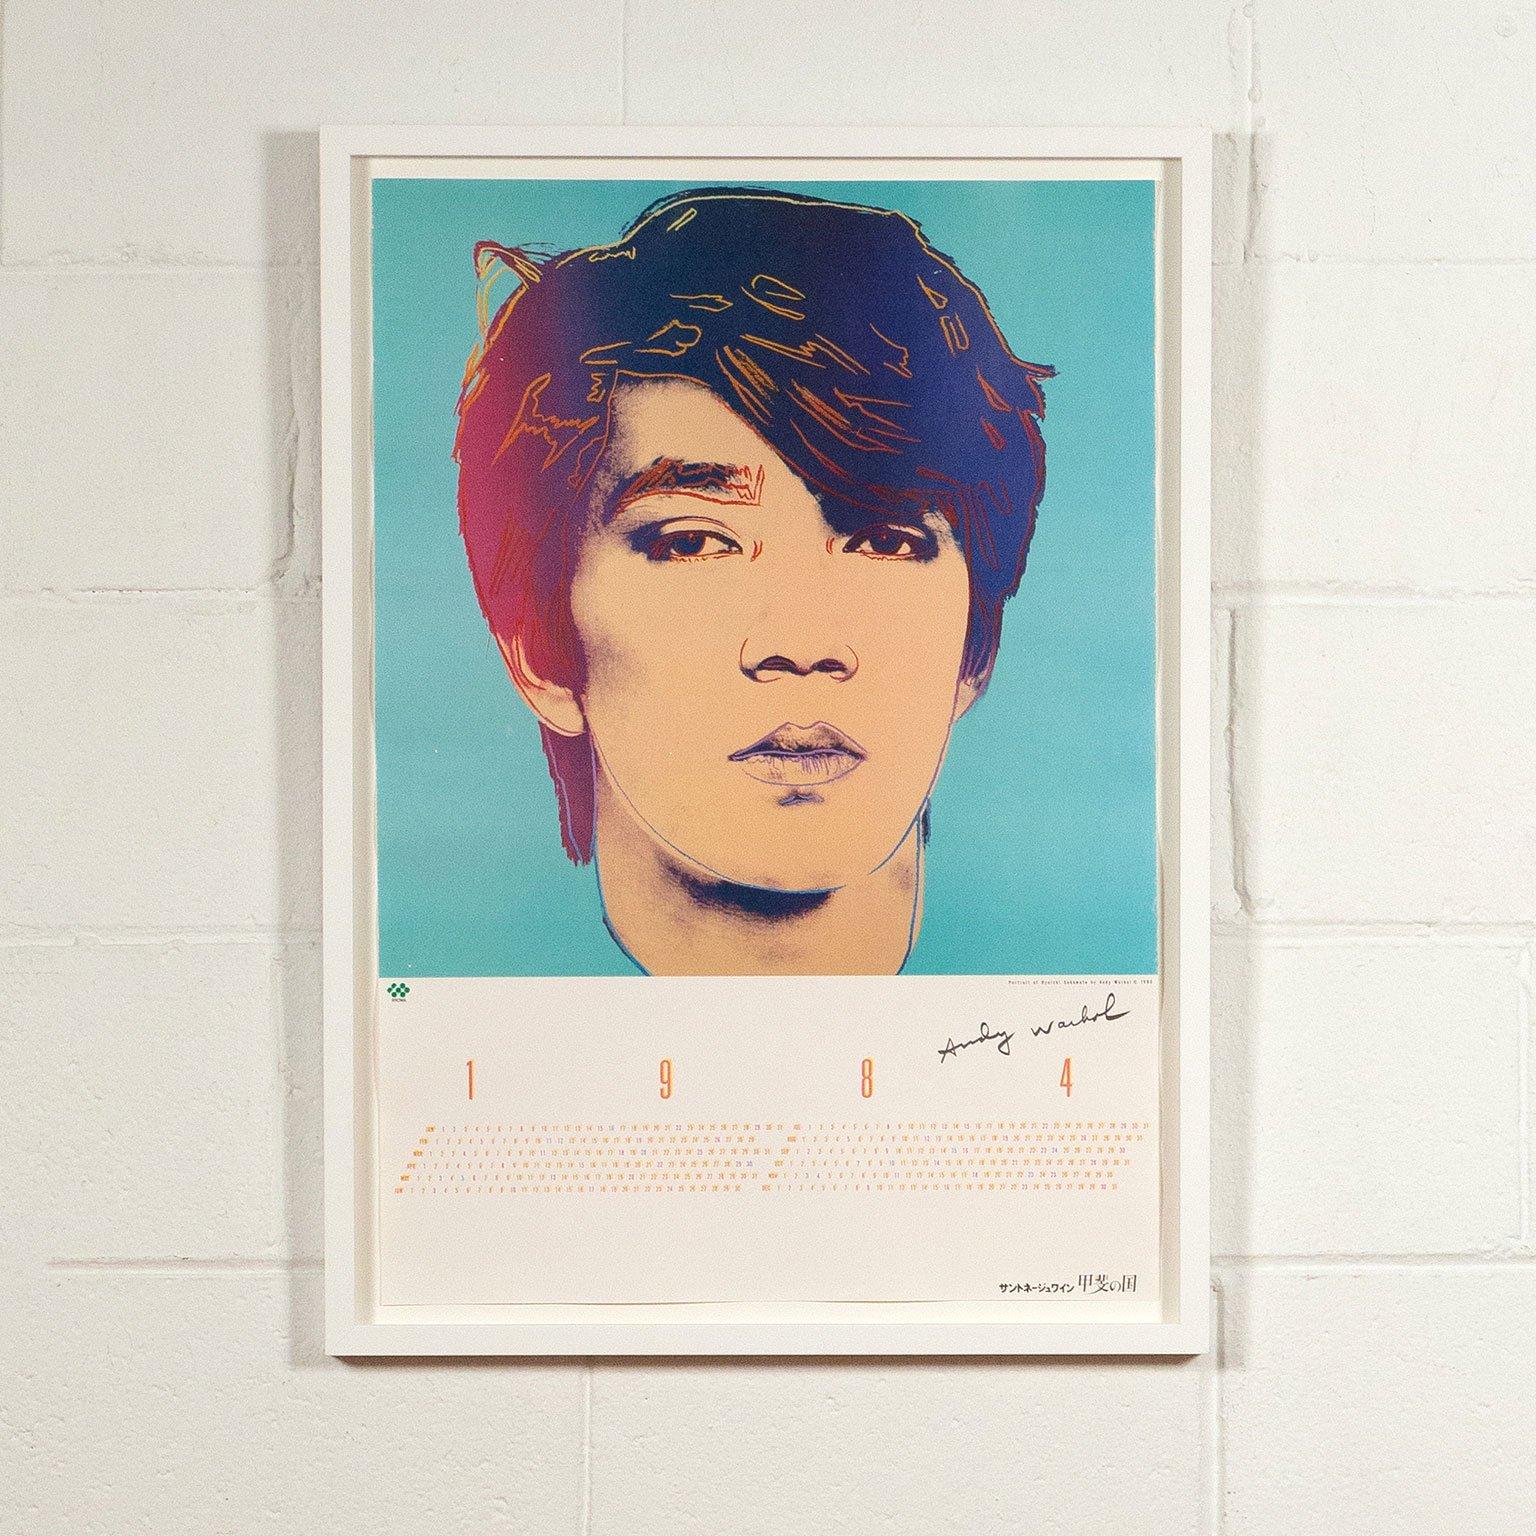 Ryuichi Sakamoto - Print by Andy Warhol